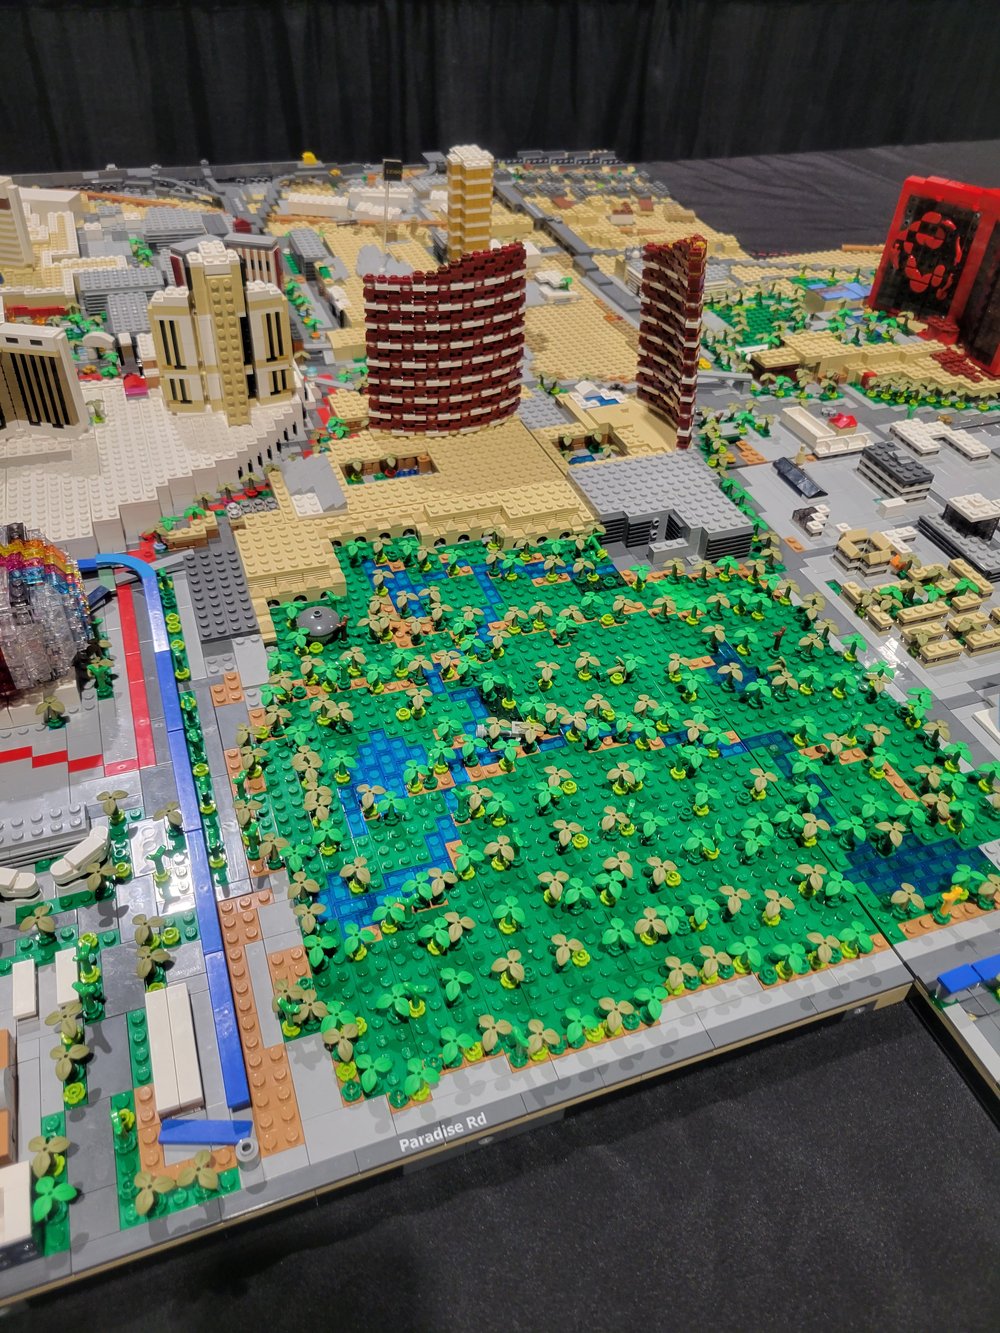 Micro LEGO Las Vegas on display this - Beyond the Brick